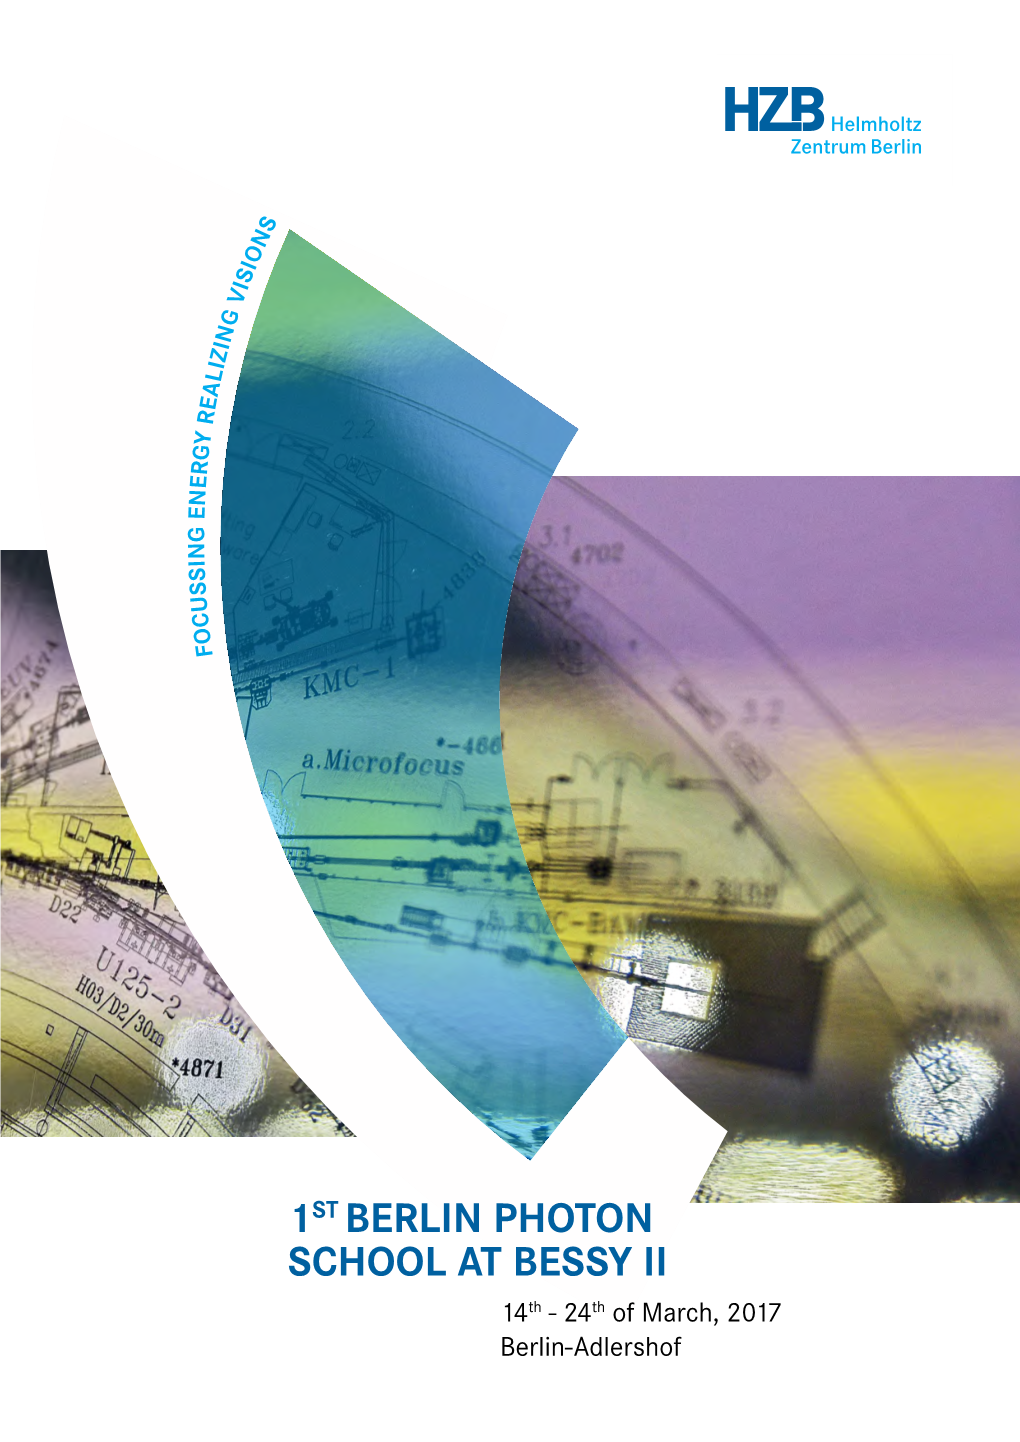 1St Berlin Photon School at Bessy II